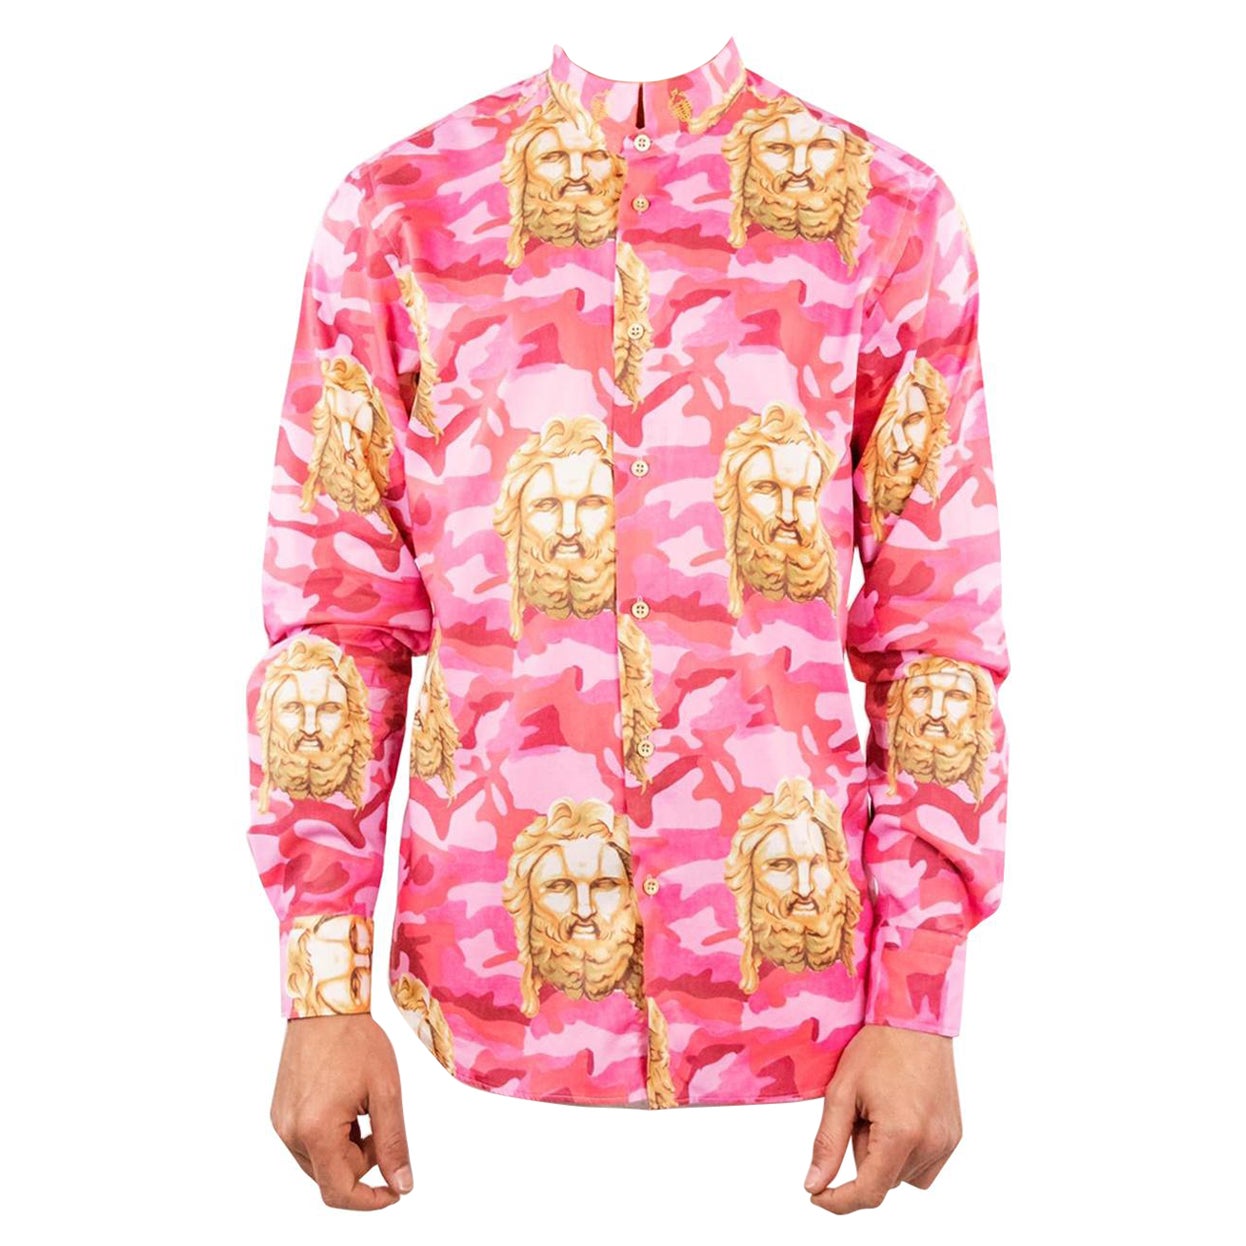 Pink multicoloured Zeus shirt NWOT